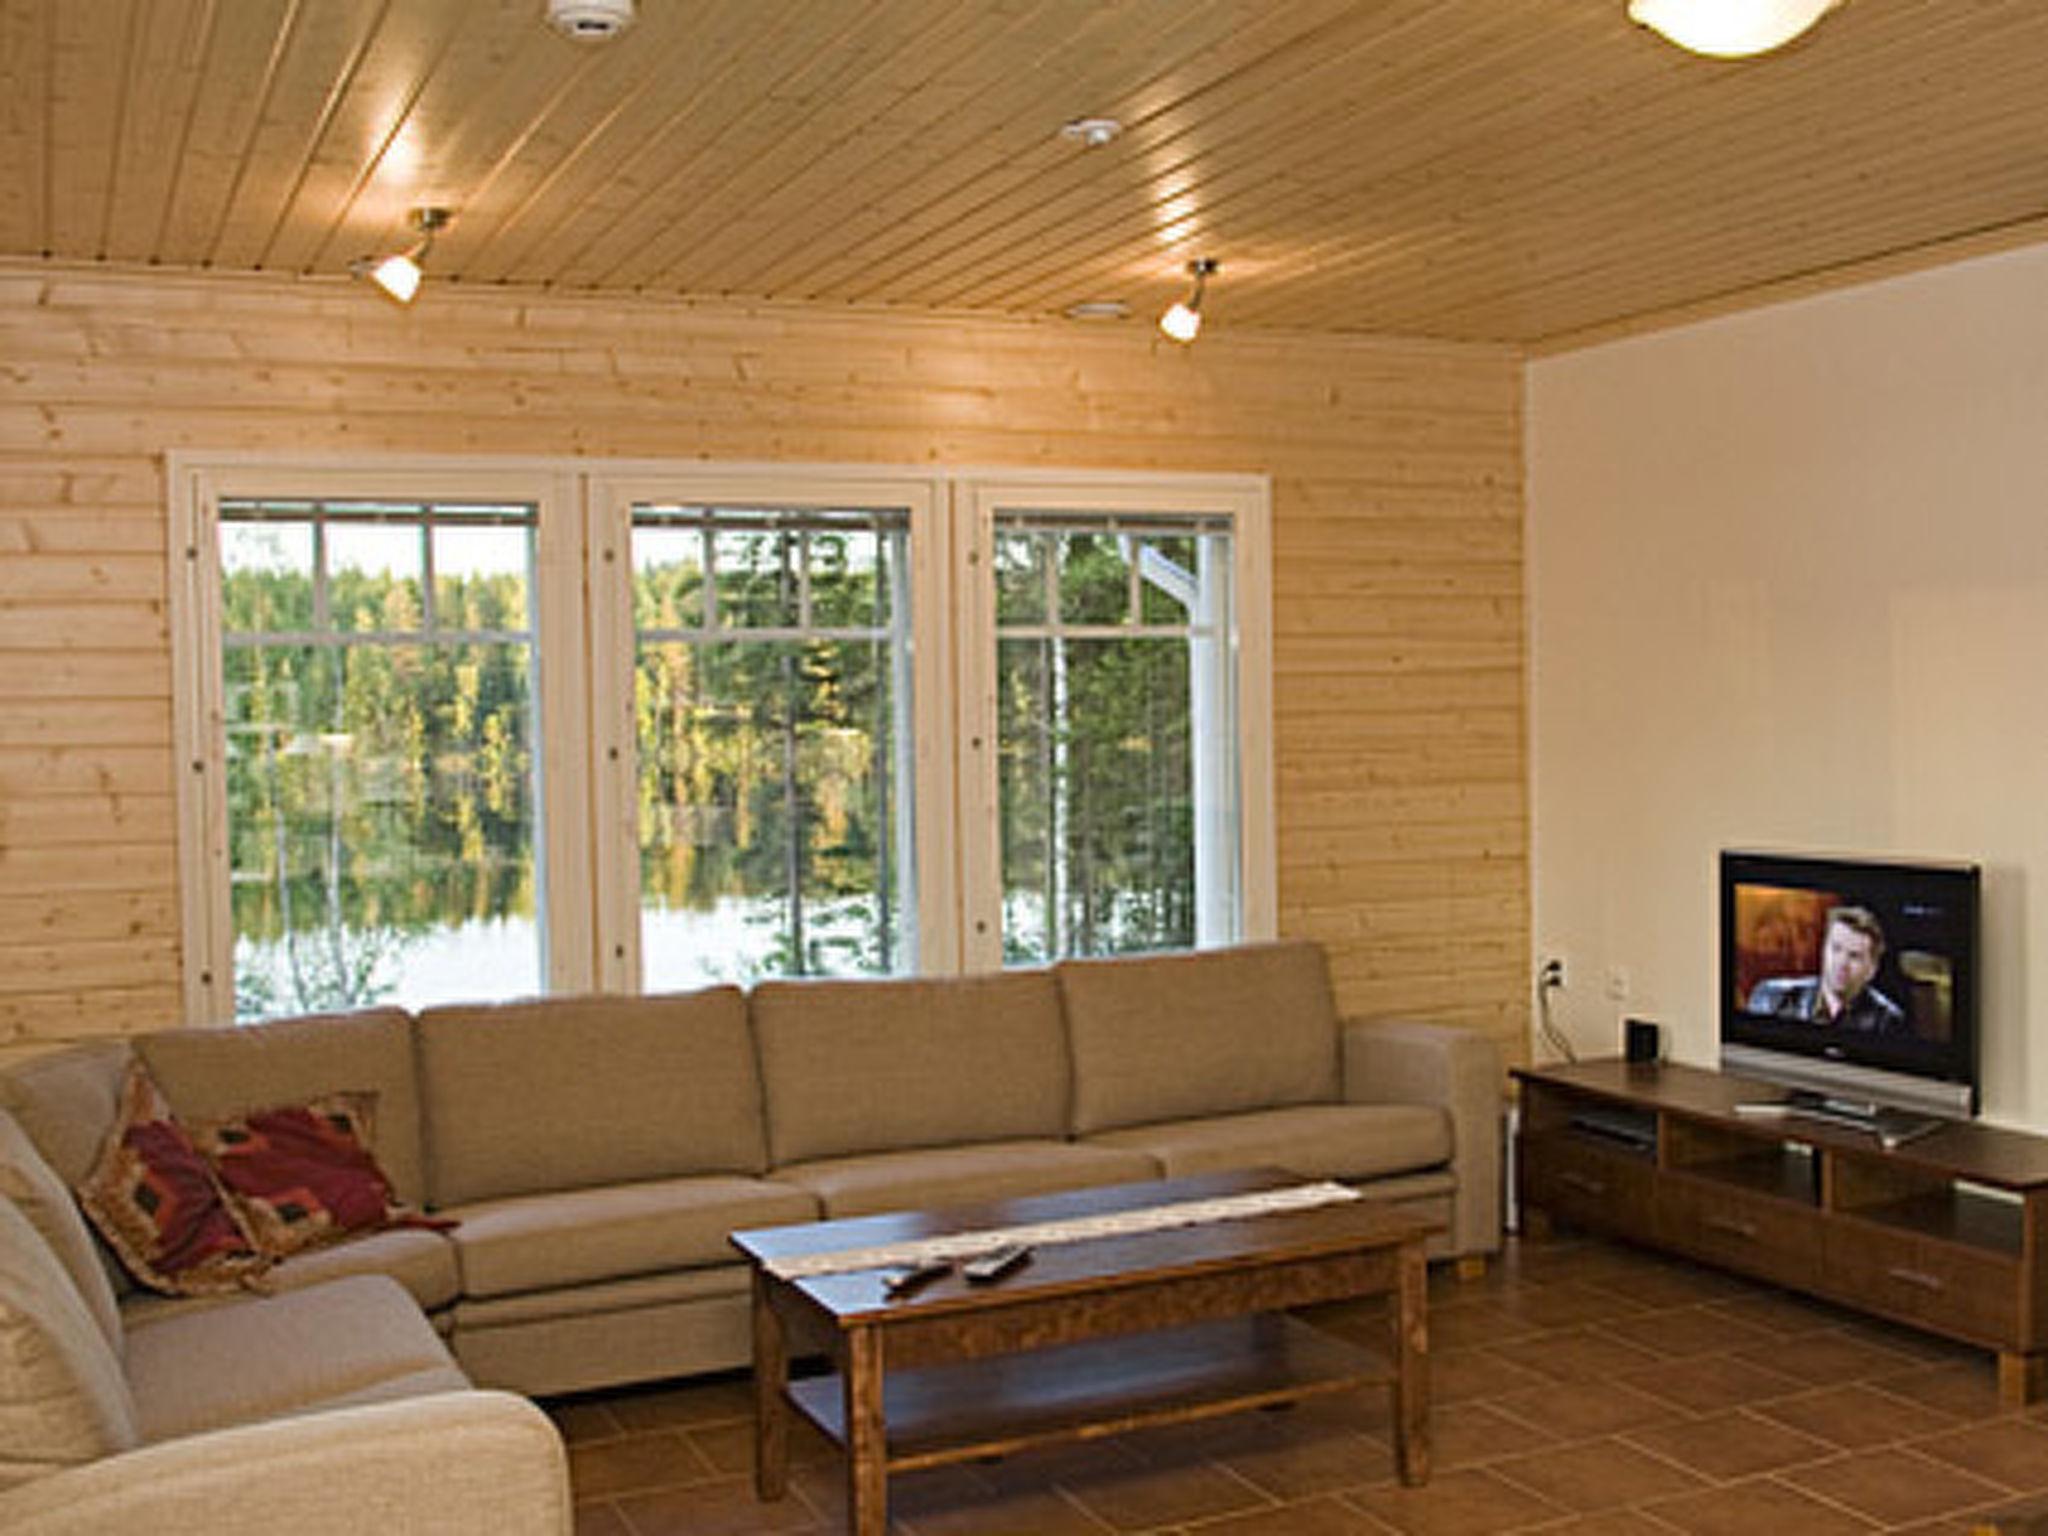 Photo 10 - 4 bedroom House in Kuopio with sauna